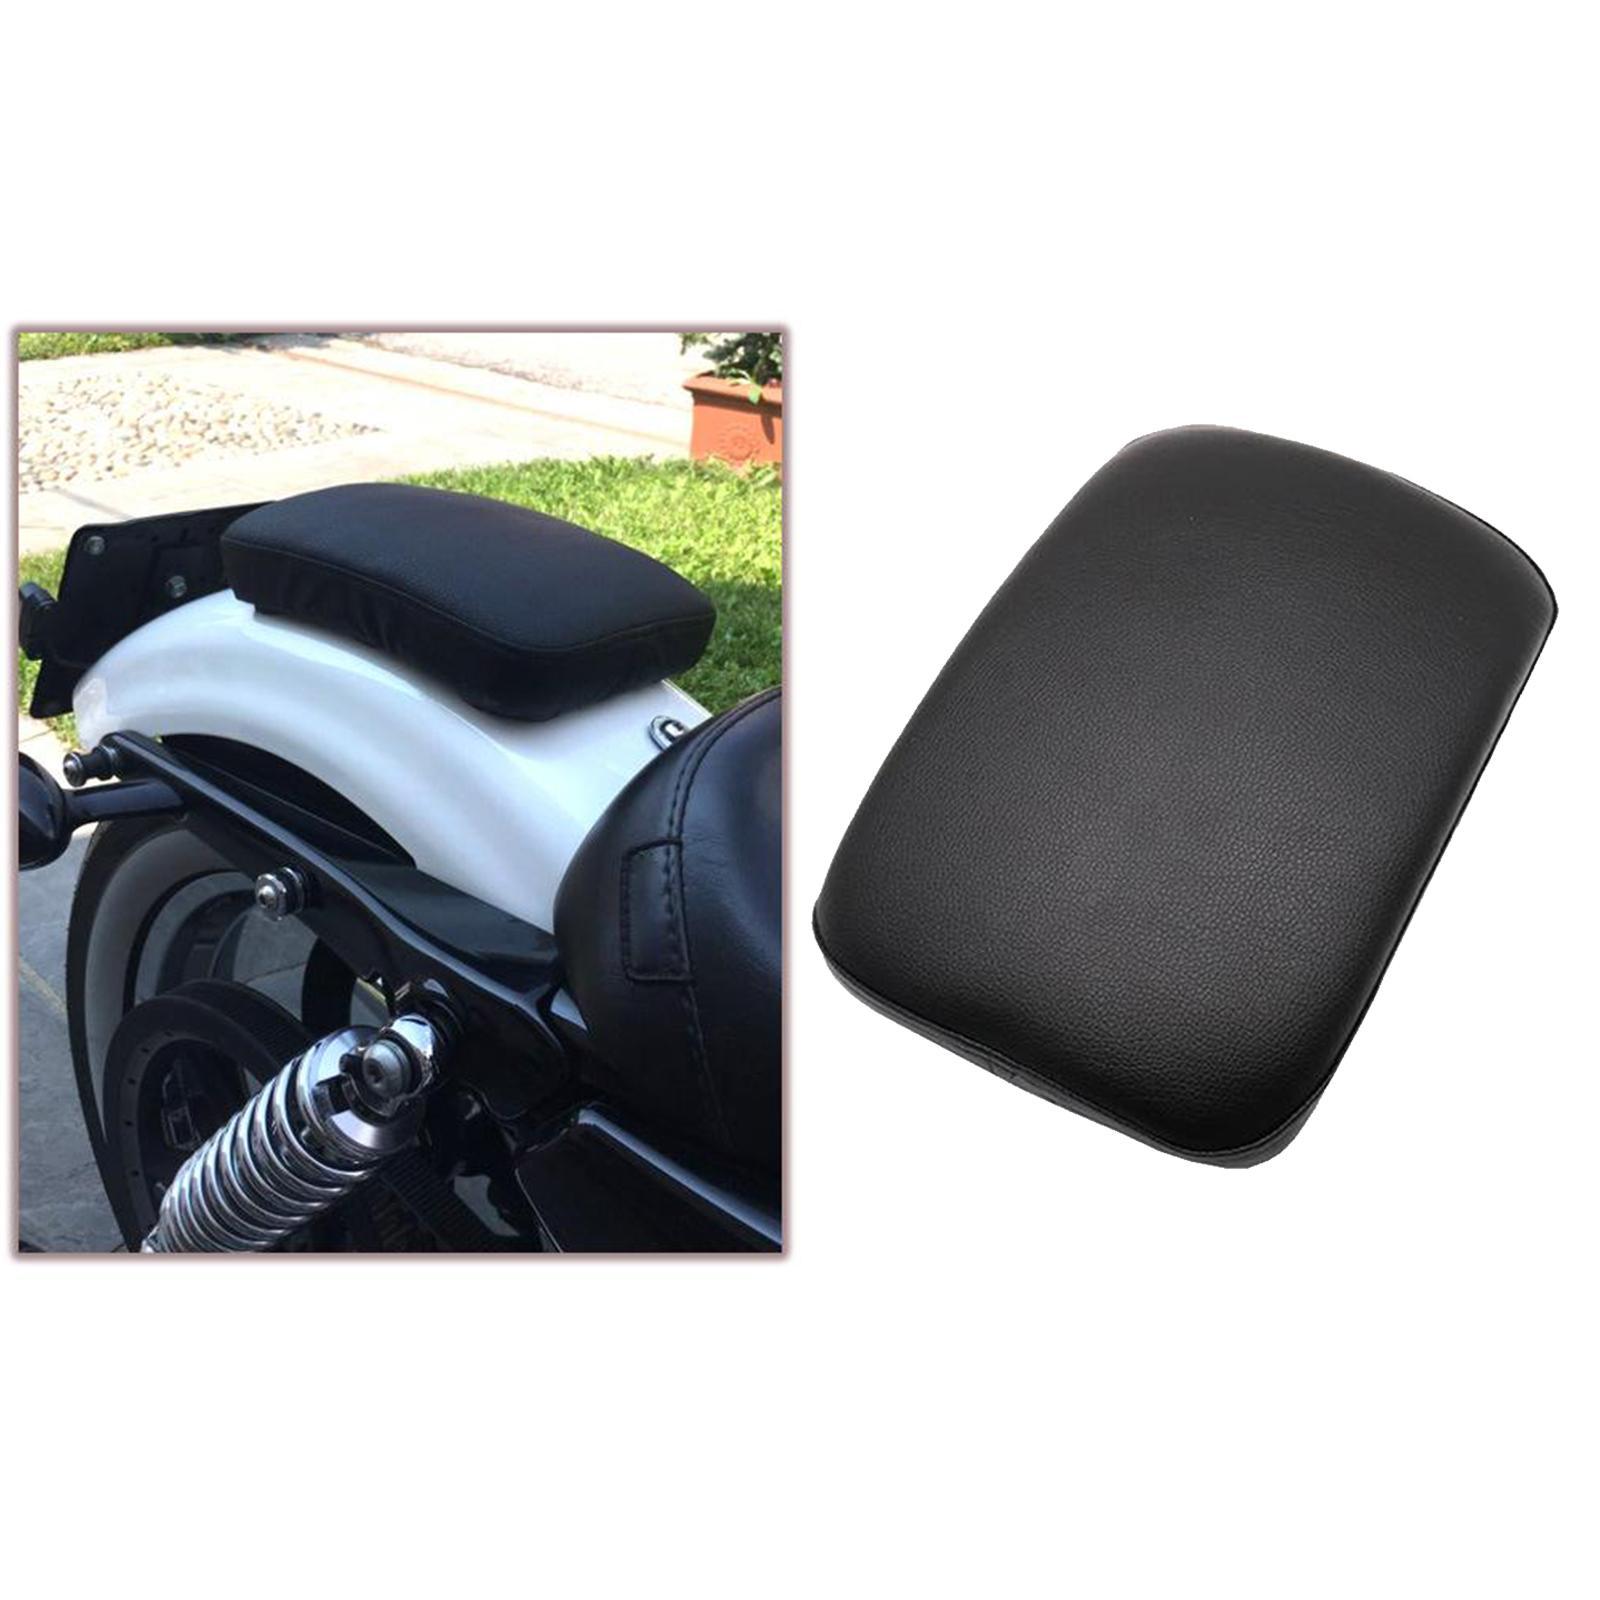 Motorcycle Pillion Passenger Pad Seat for   XL883 Black